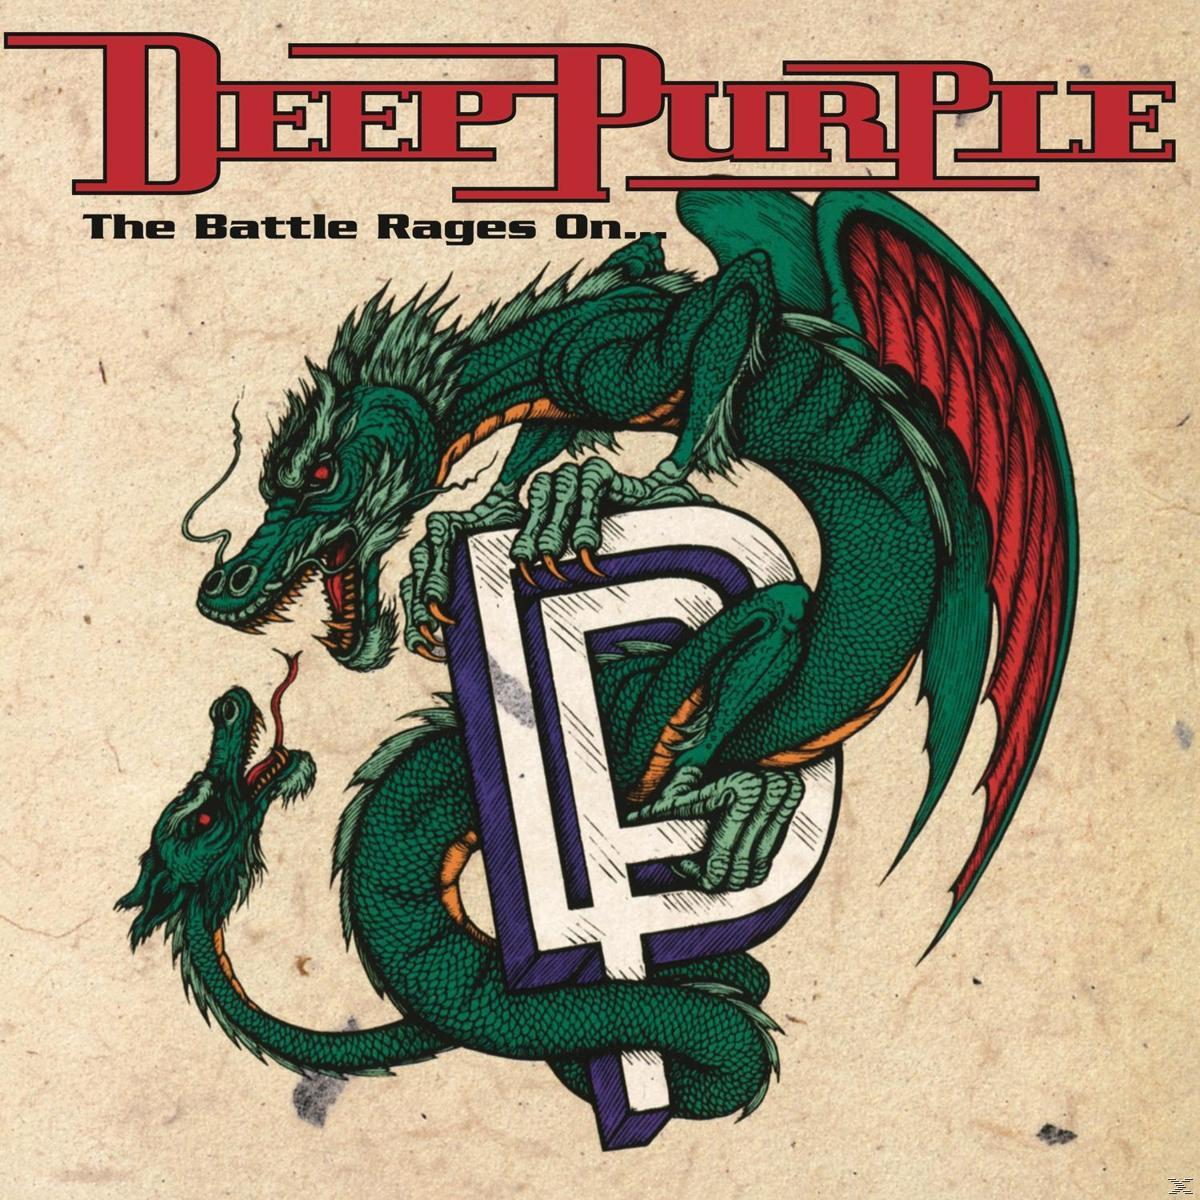 Deep - (Vinyl) Rages On - Battle The Purple